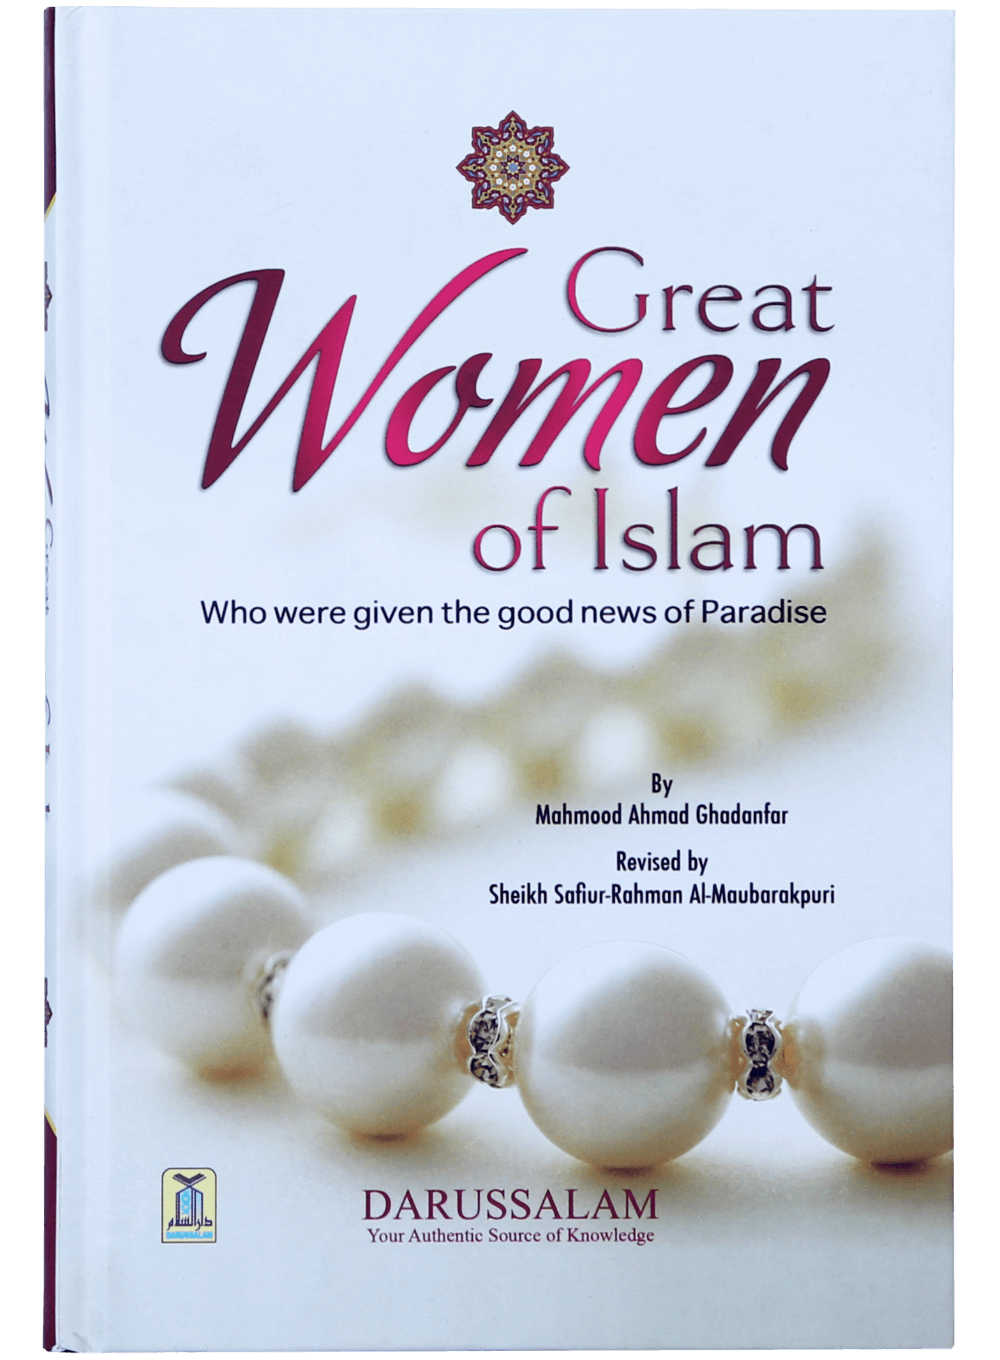 darussalam-2017-10-03-12-27-46great-women-of-islam-(1)